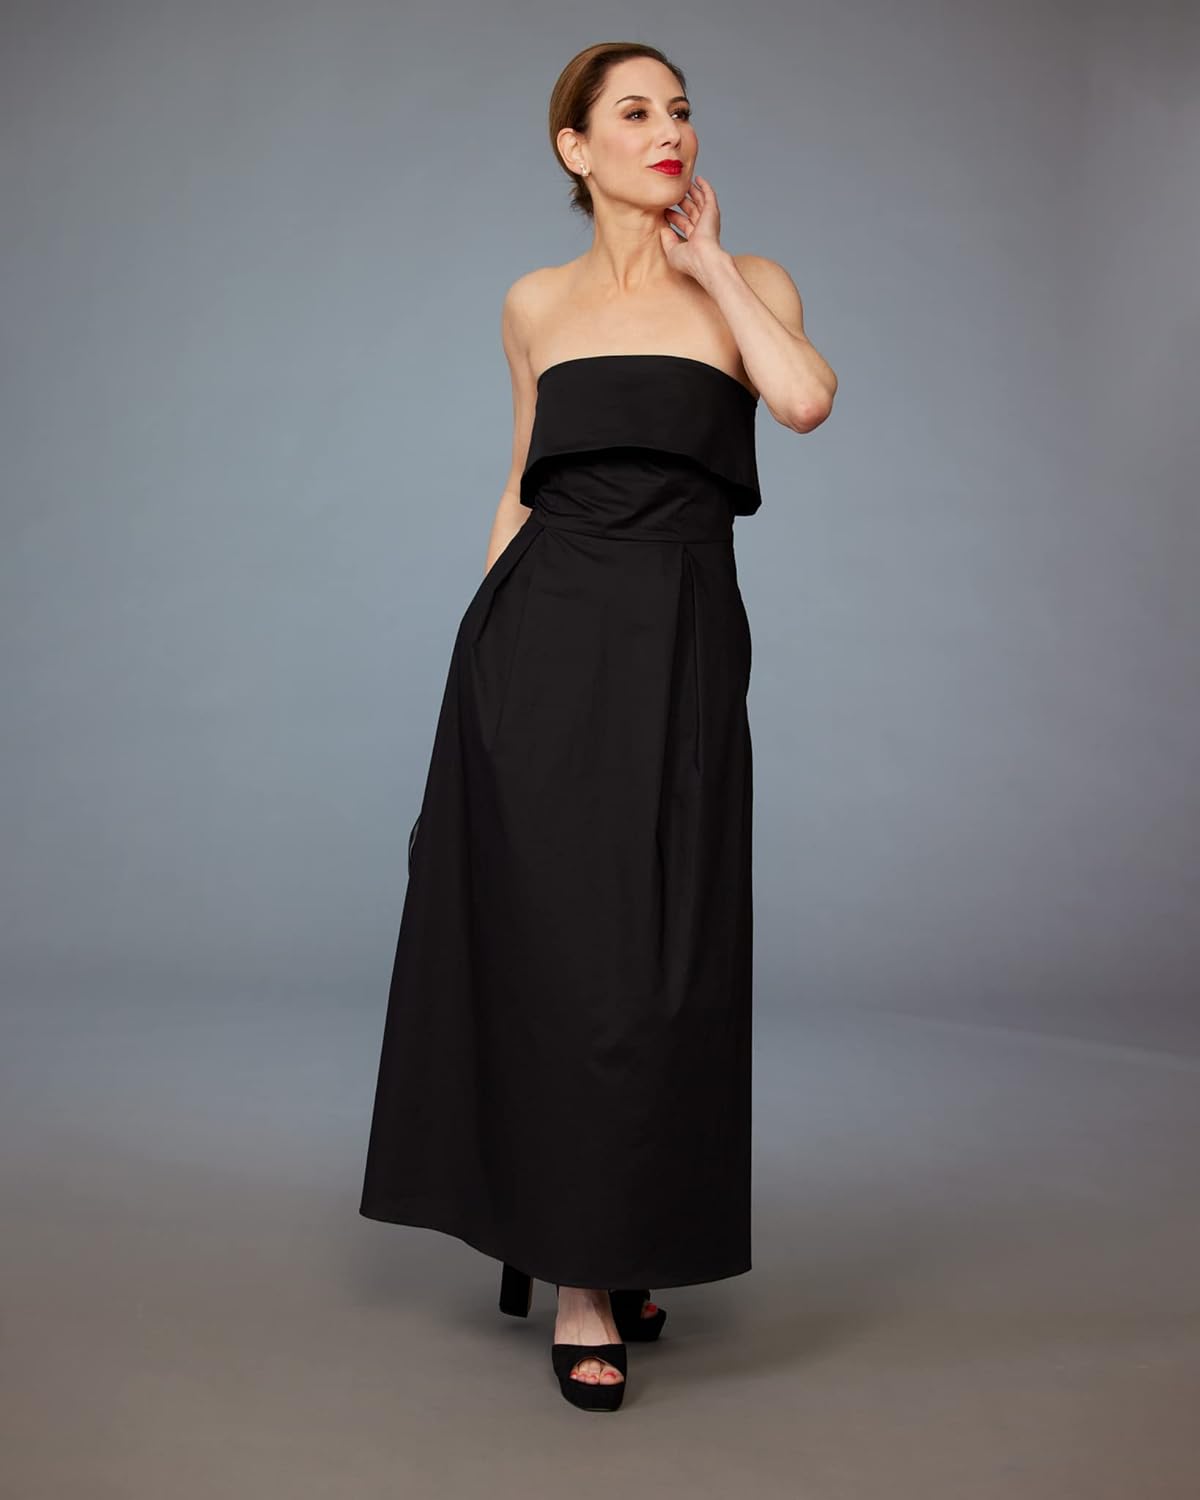 The Drop Women' Black Stretch Poplin Sleeveless Midi Dress by @carla.rockmore